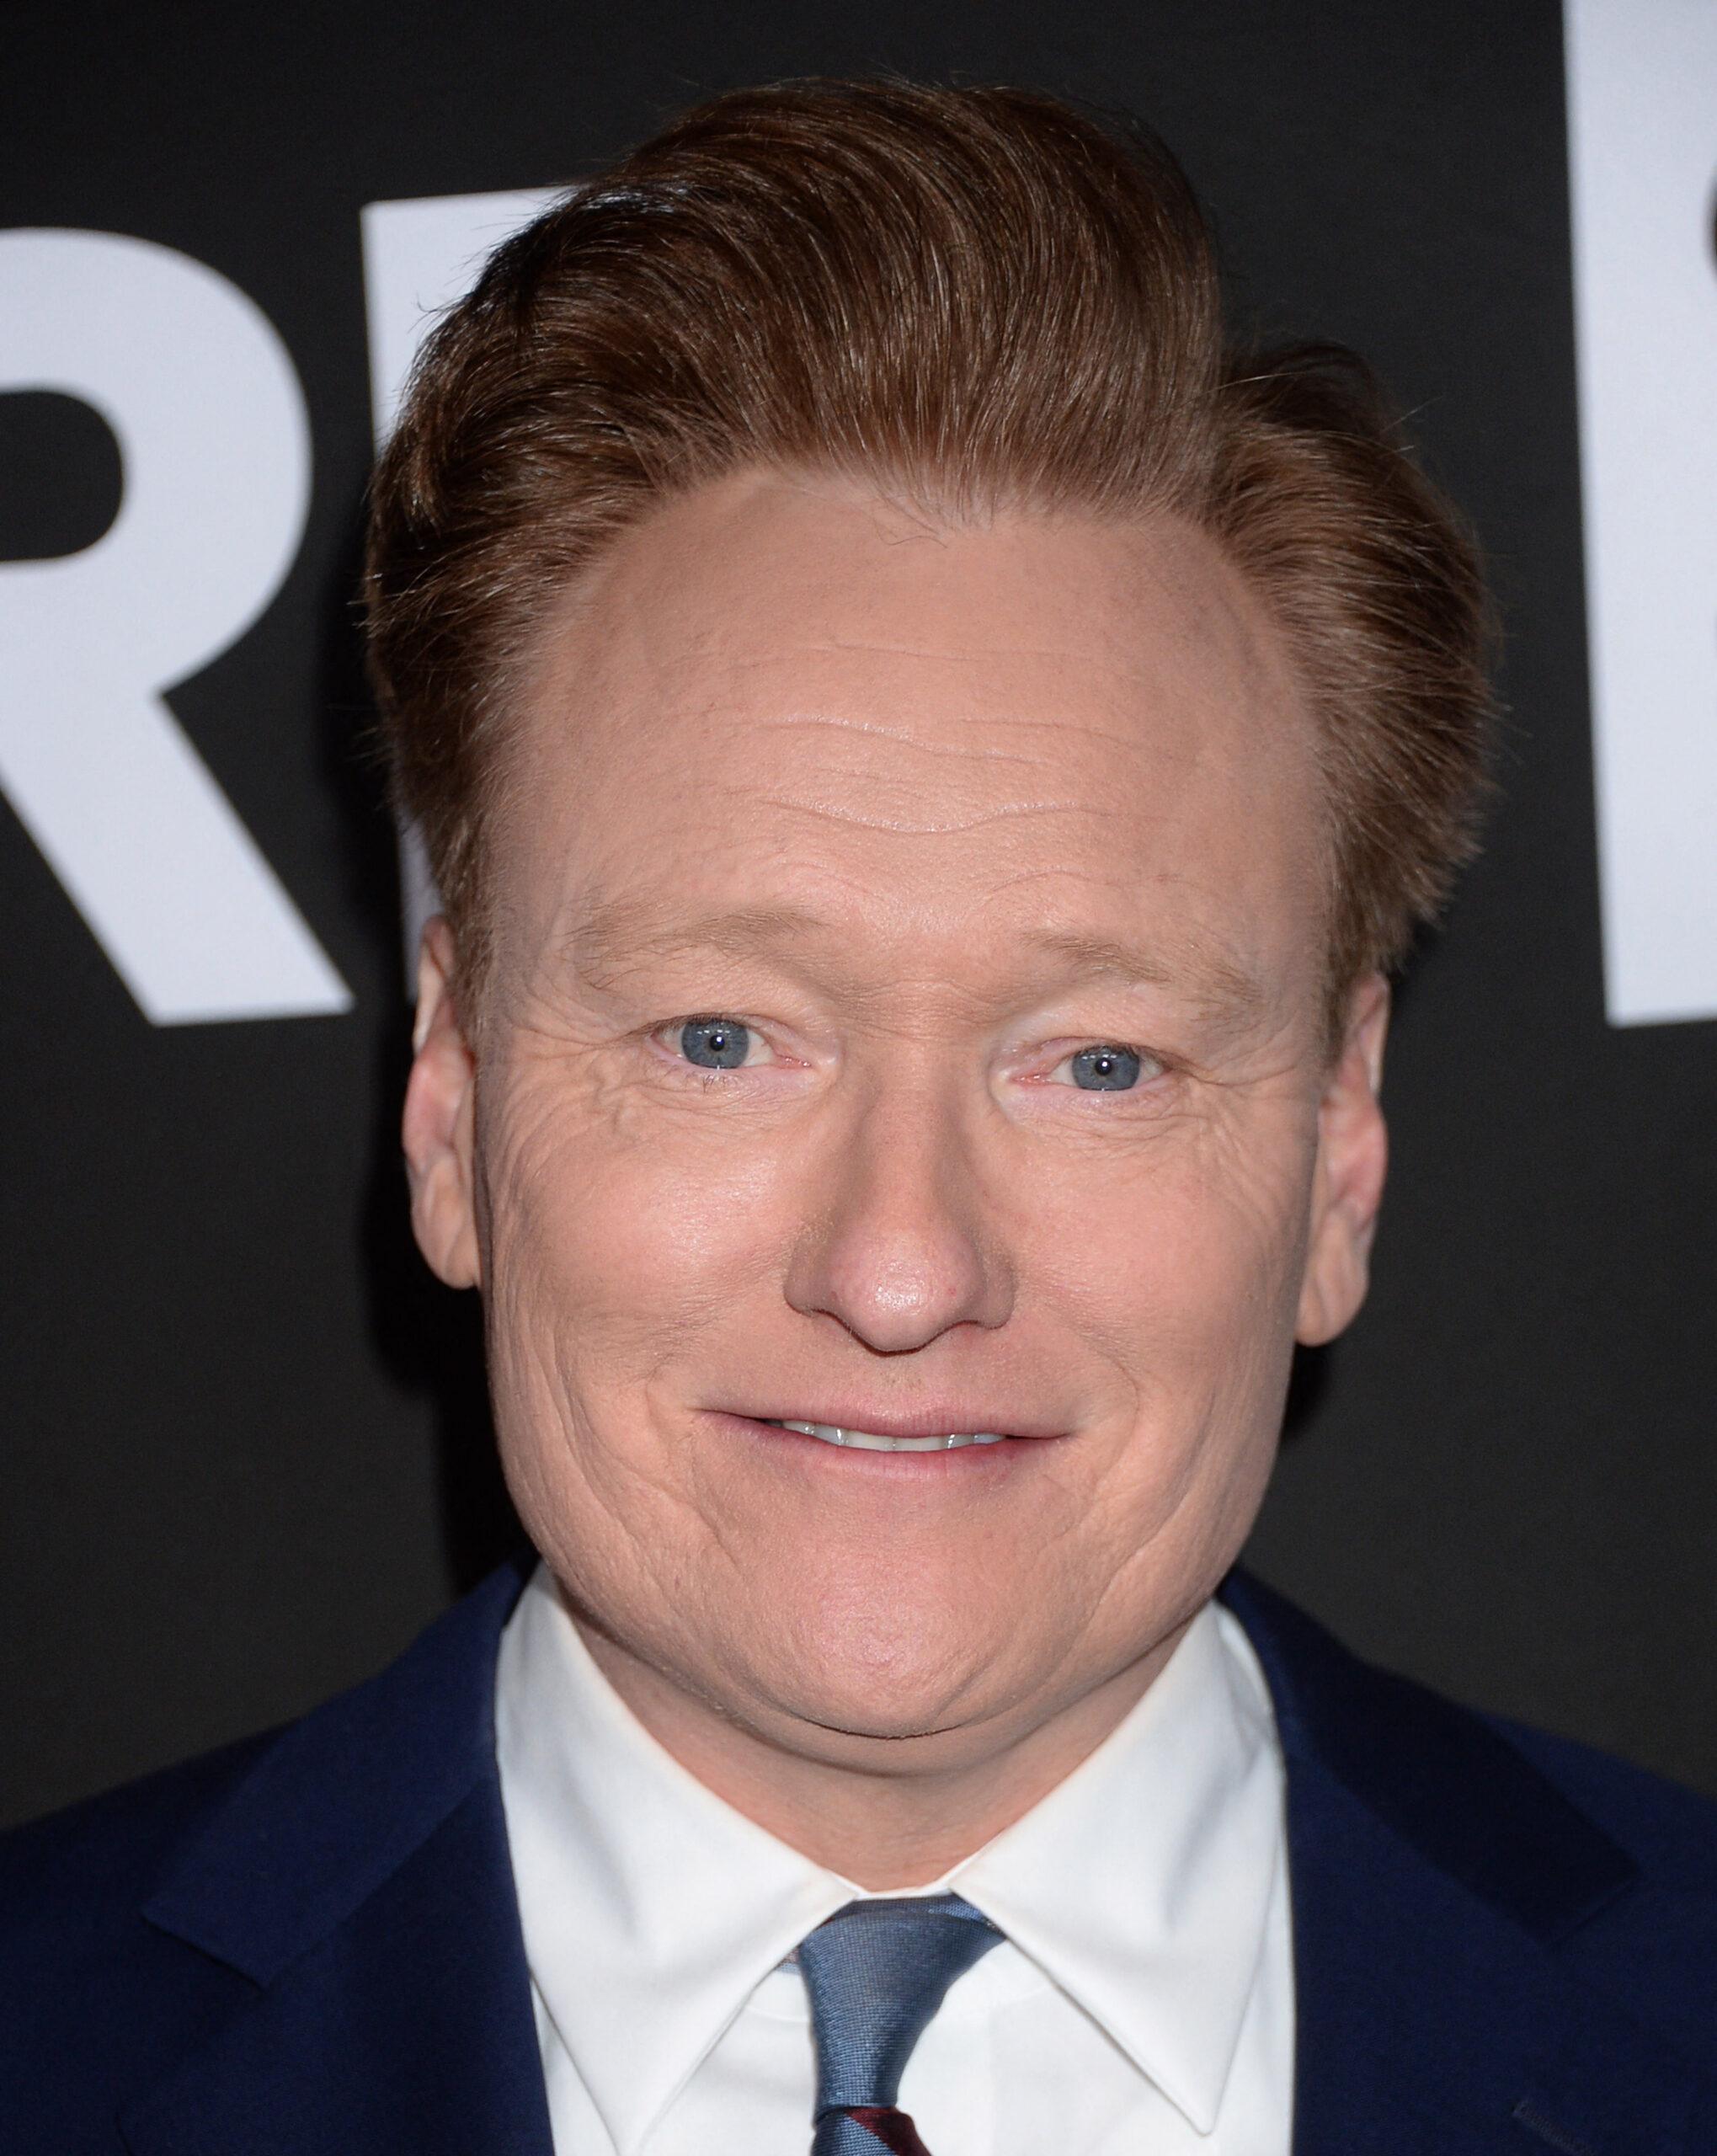 Conan O'Brien demitido do 'The Tonight Show'